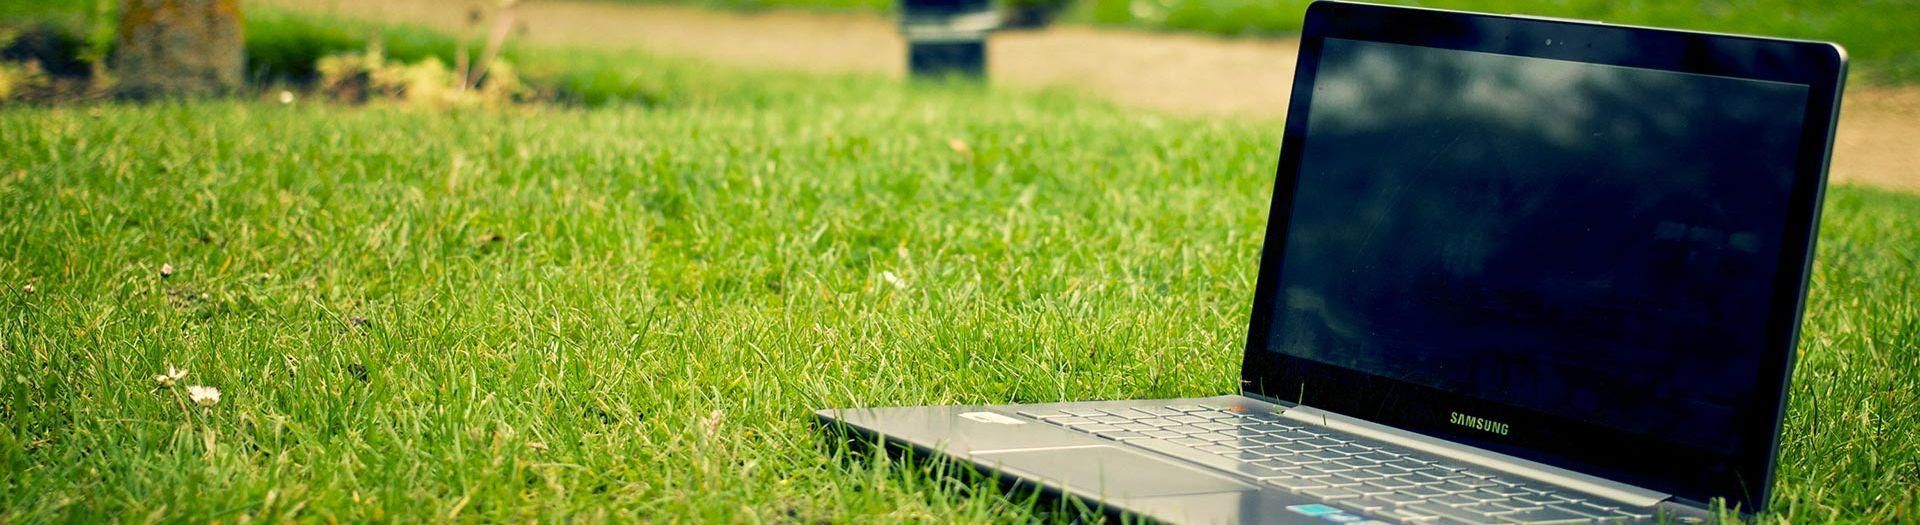 laptop-notebook-grass-meadow-1c6fa79c Scan